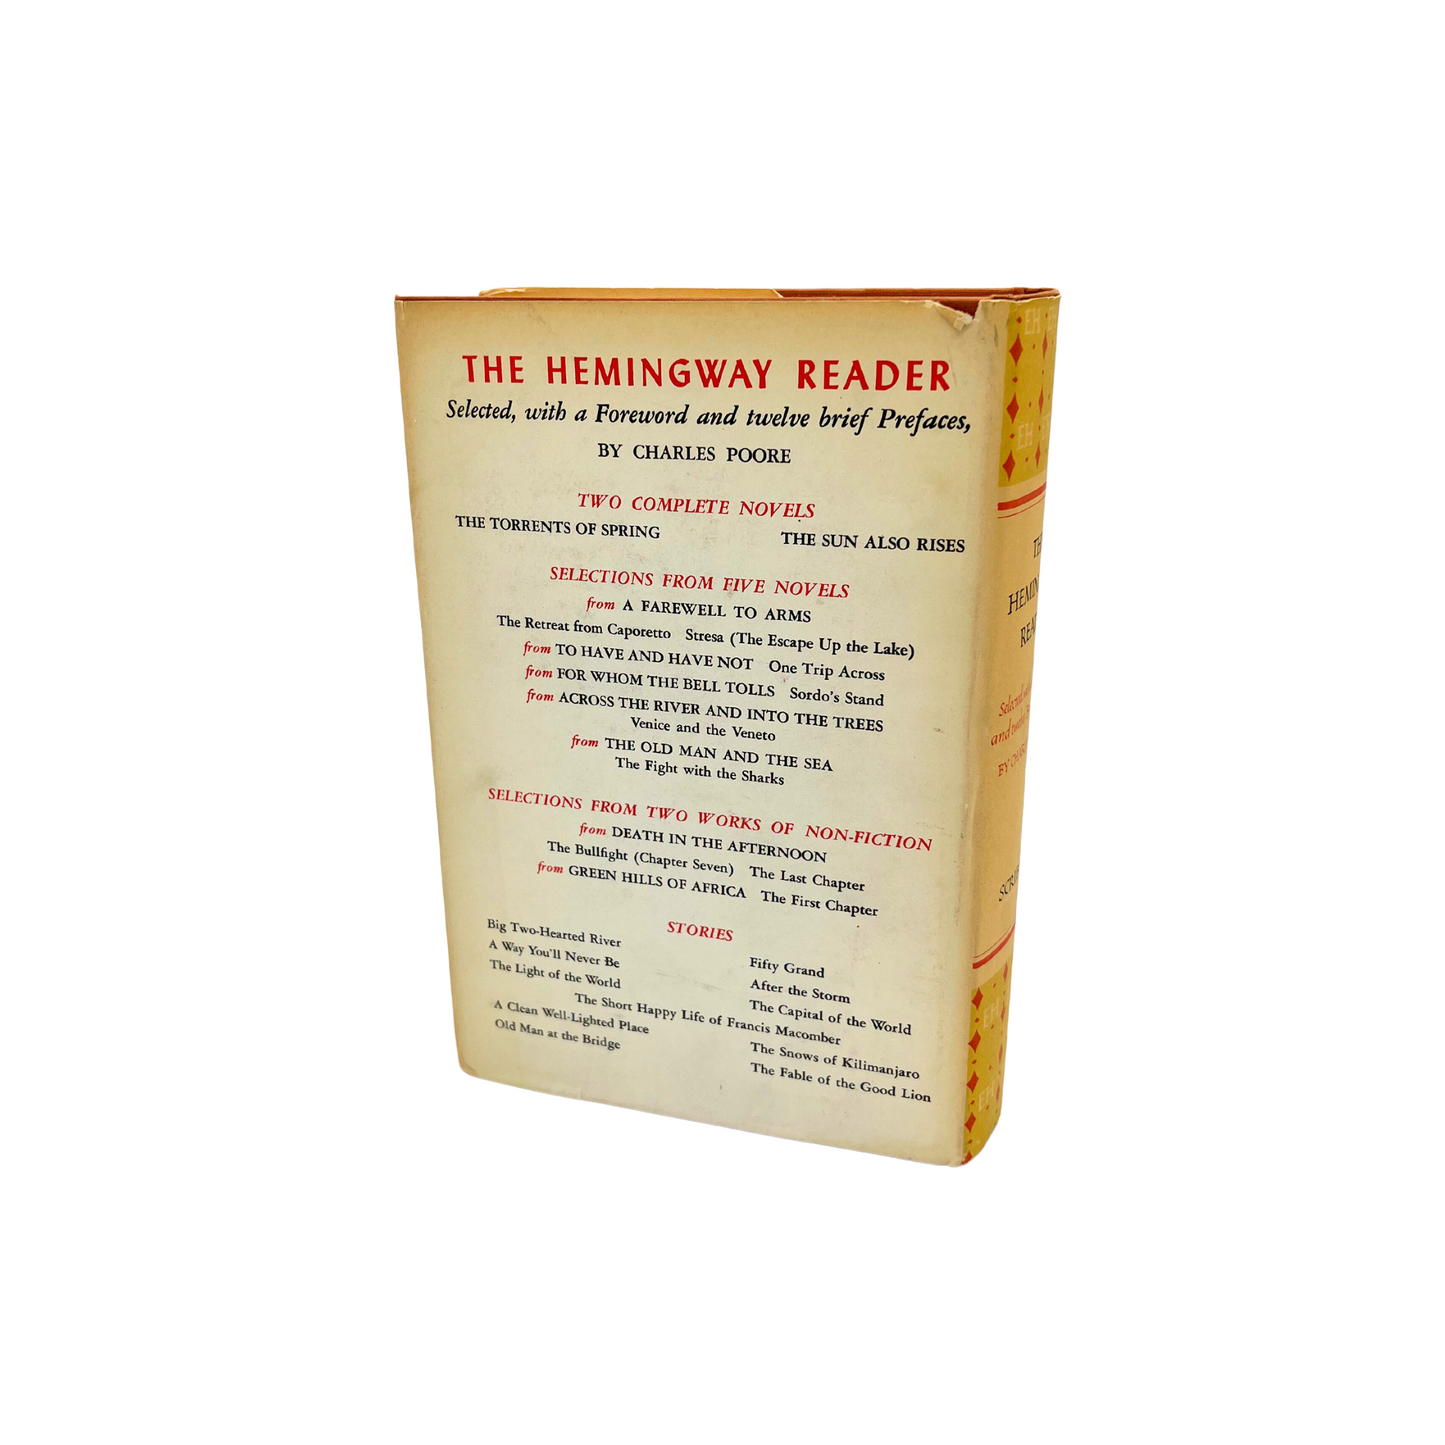 1953 hardcover book: The Hemingway Reader